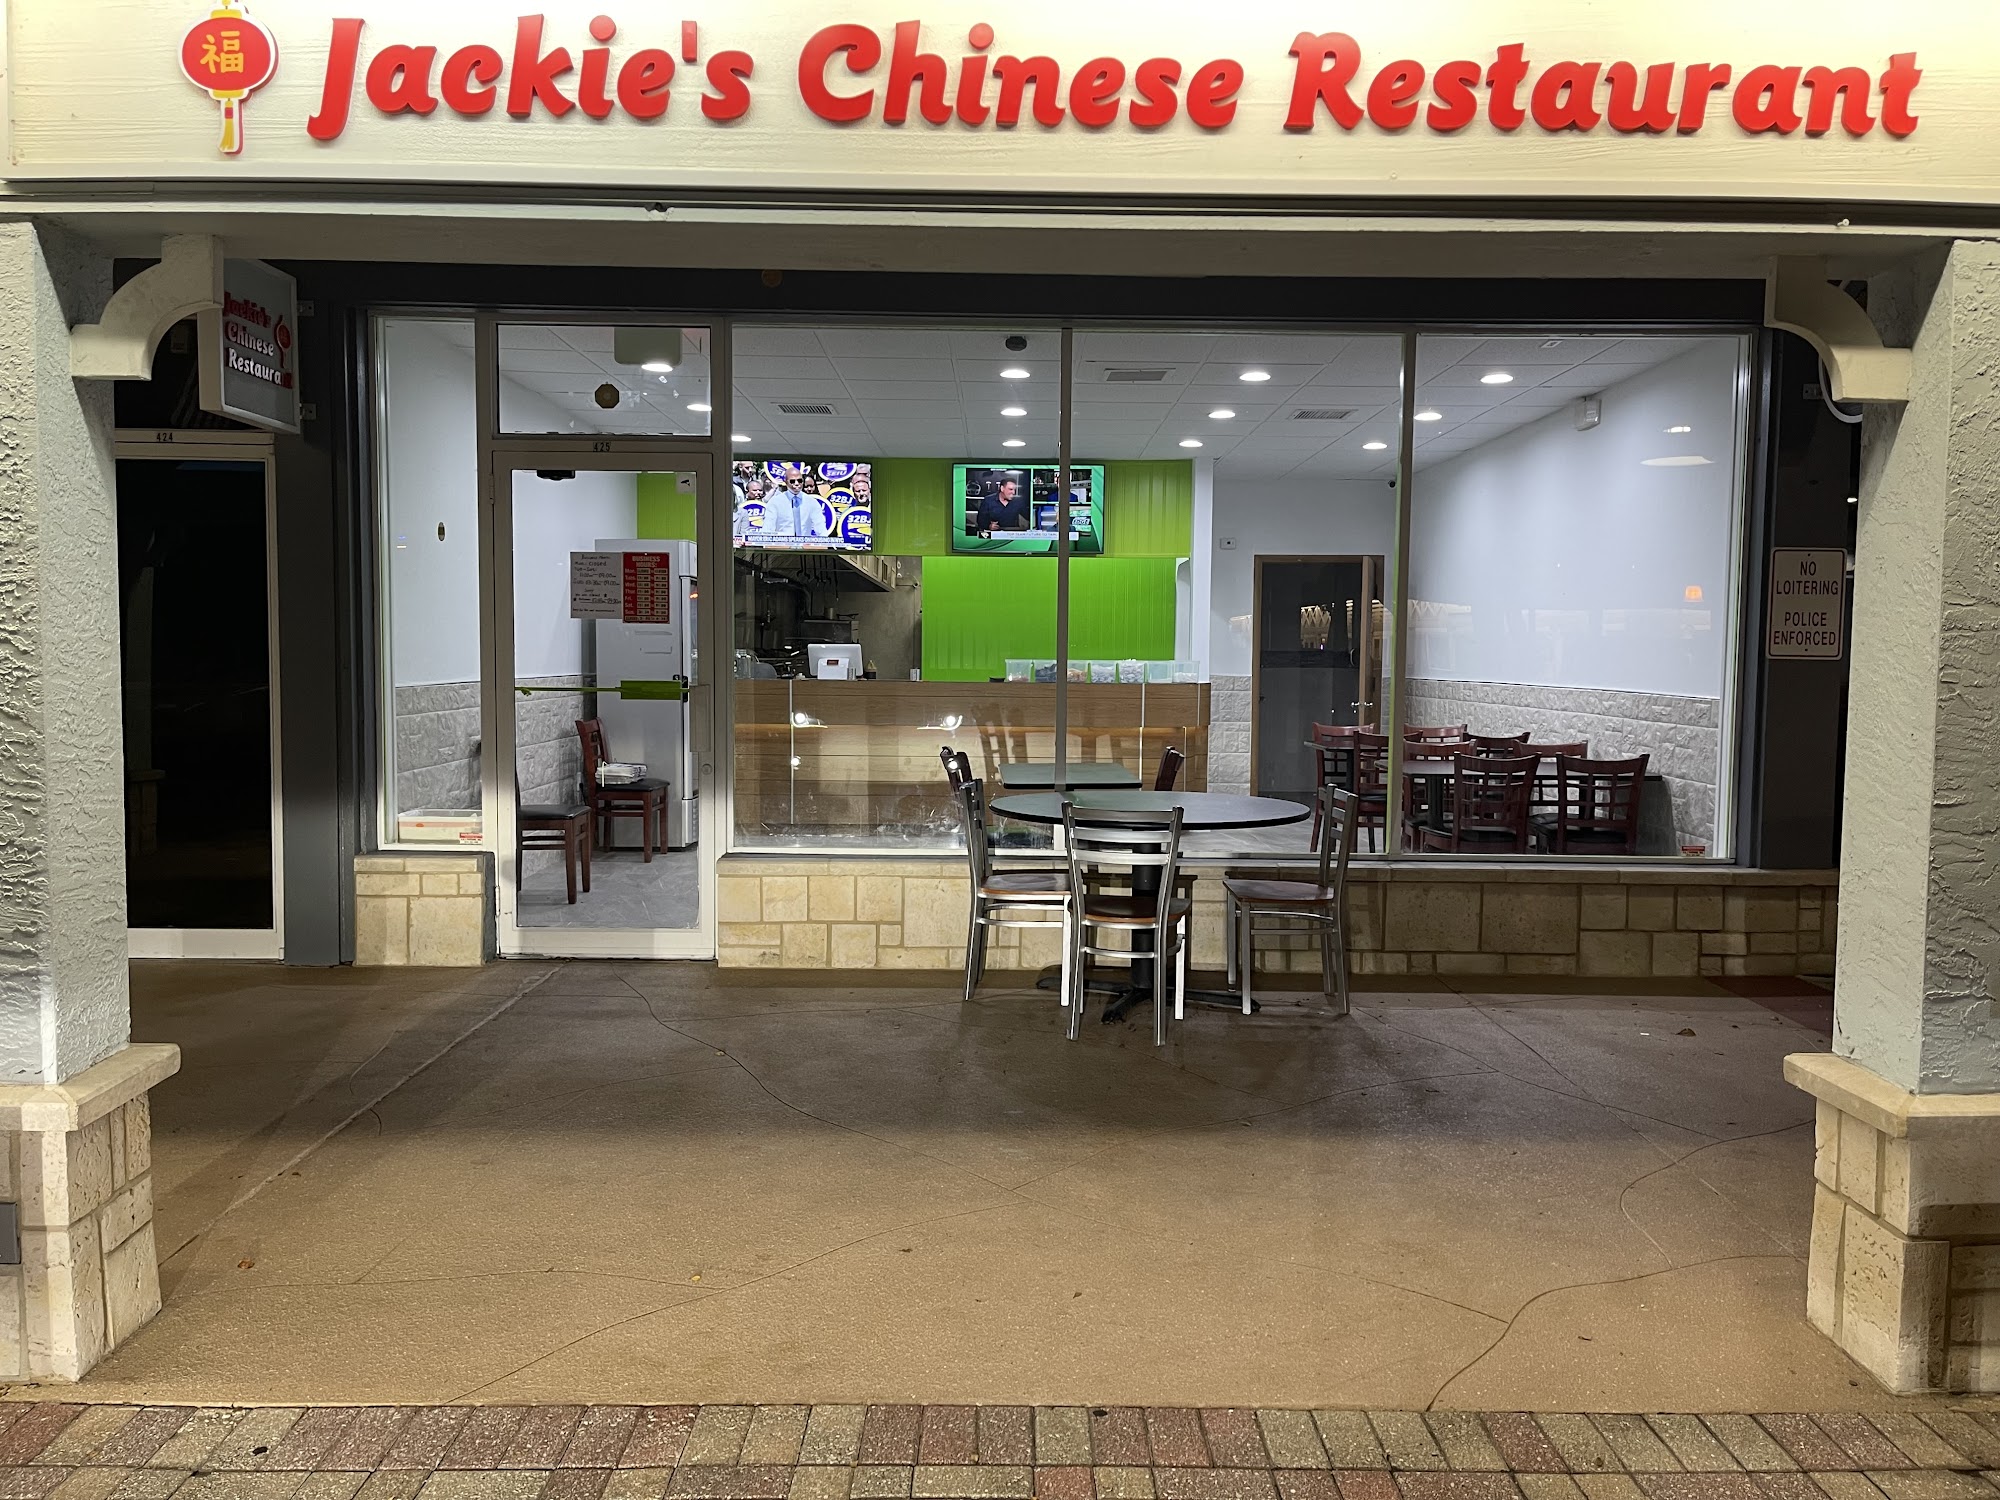 Jackie's Chinese Restaurant